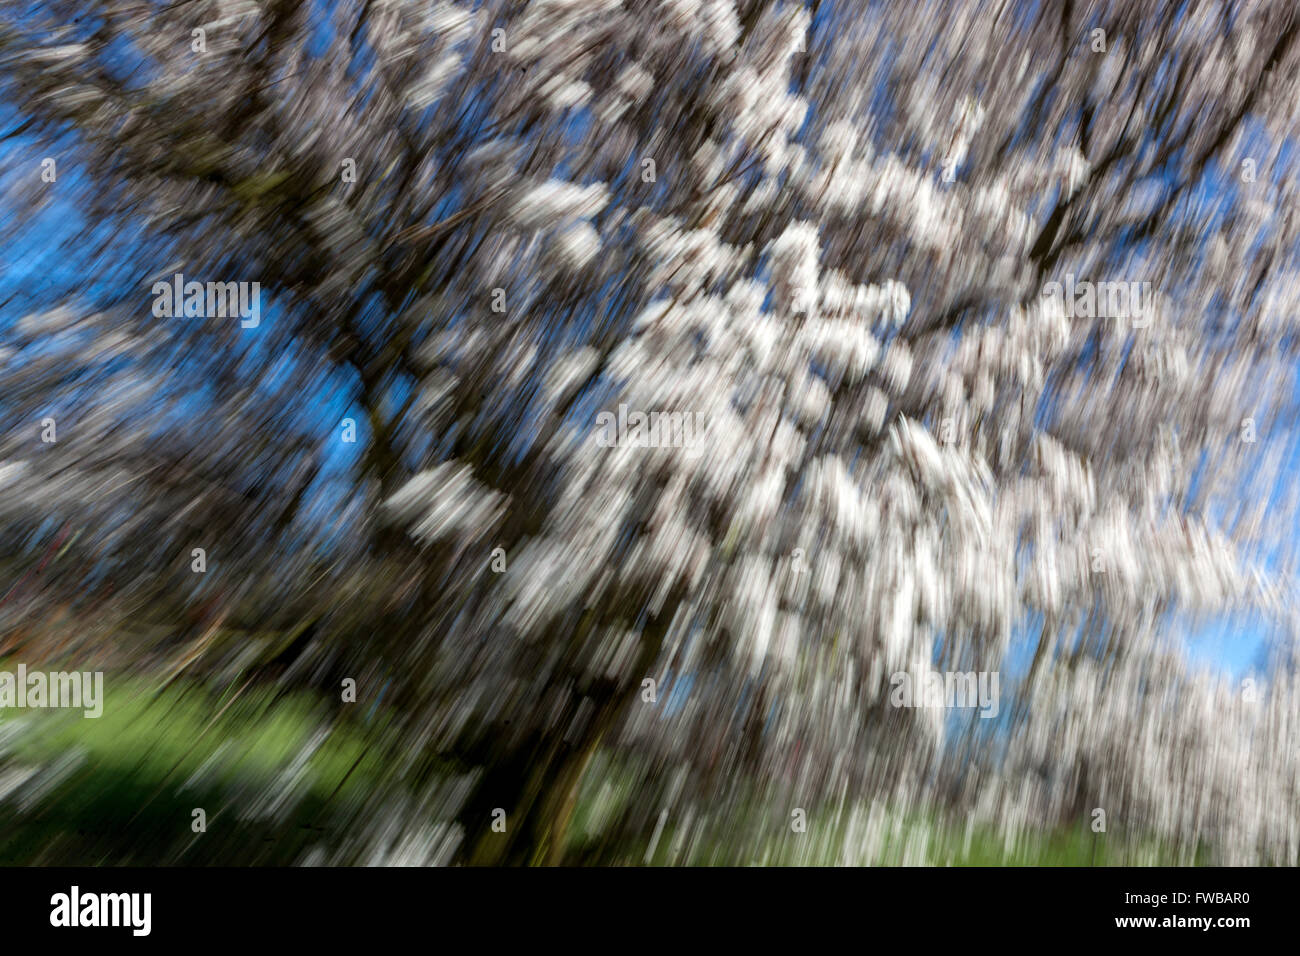 Prunus cerasifera 'Hessei', prugna mirobalana, rami fioriti dell'albero sfocati nel movimento, atmosfera primaverile Foto Stock